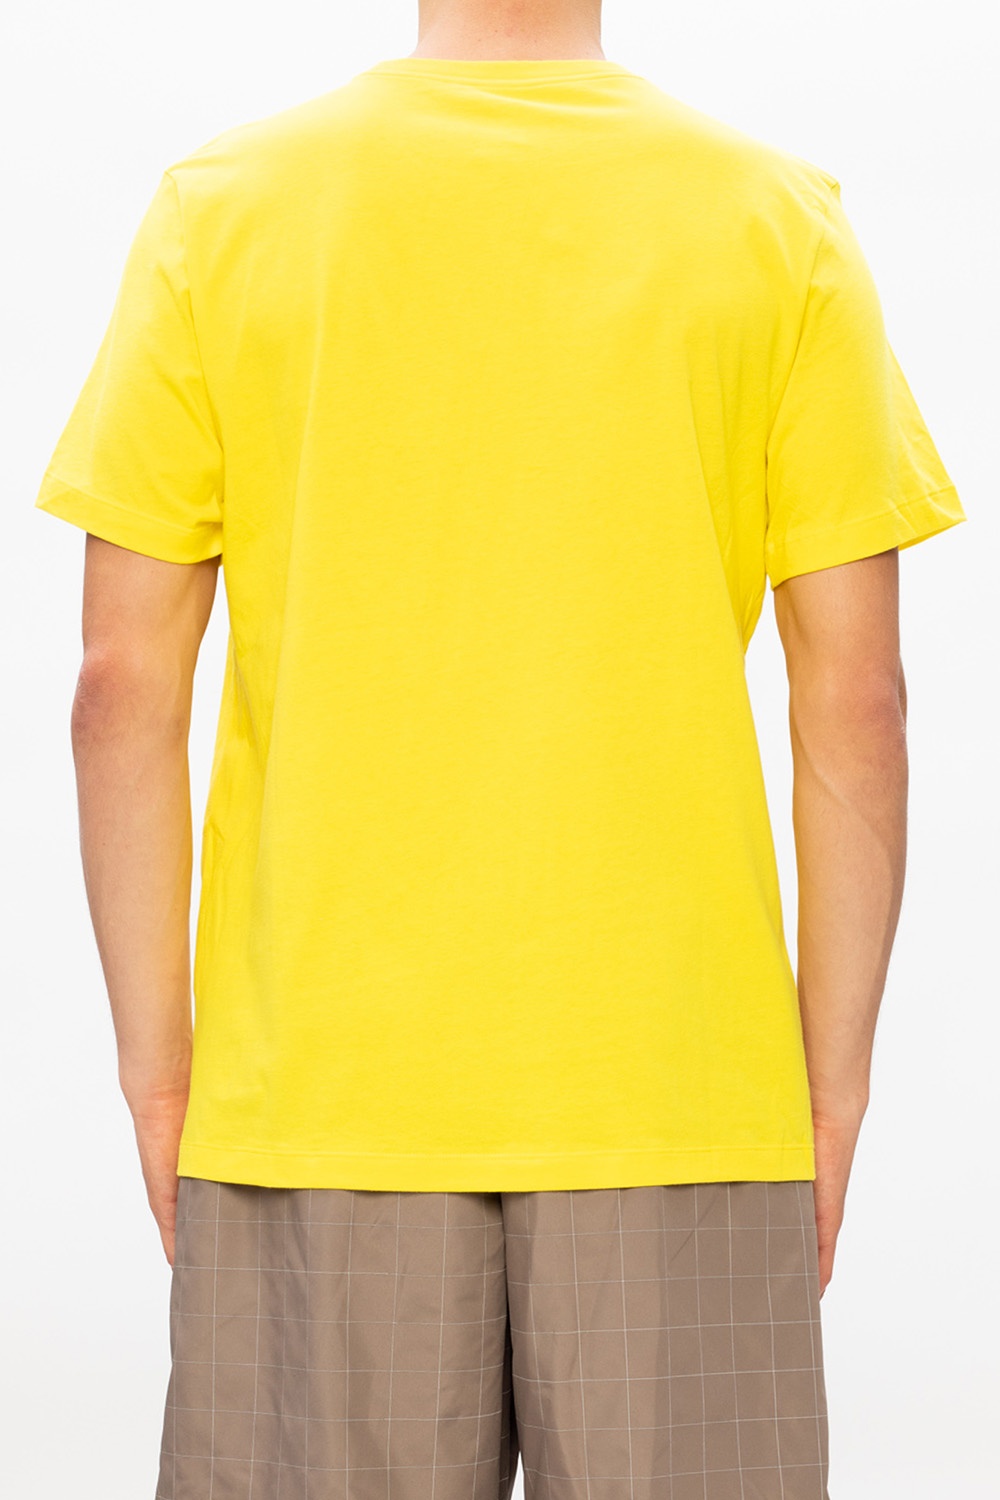 nike opti yellow shirt